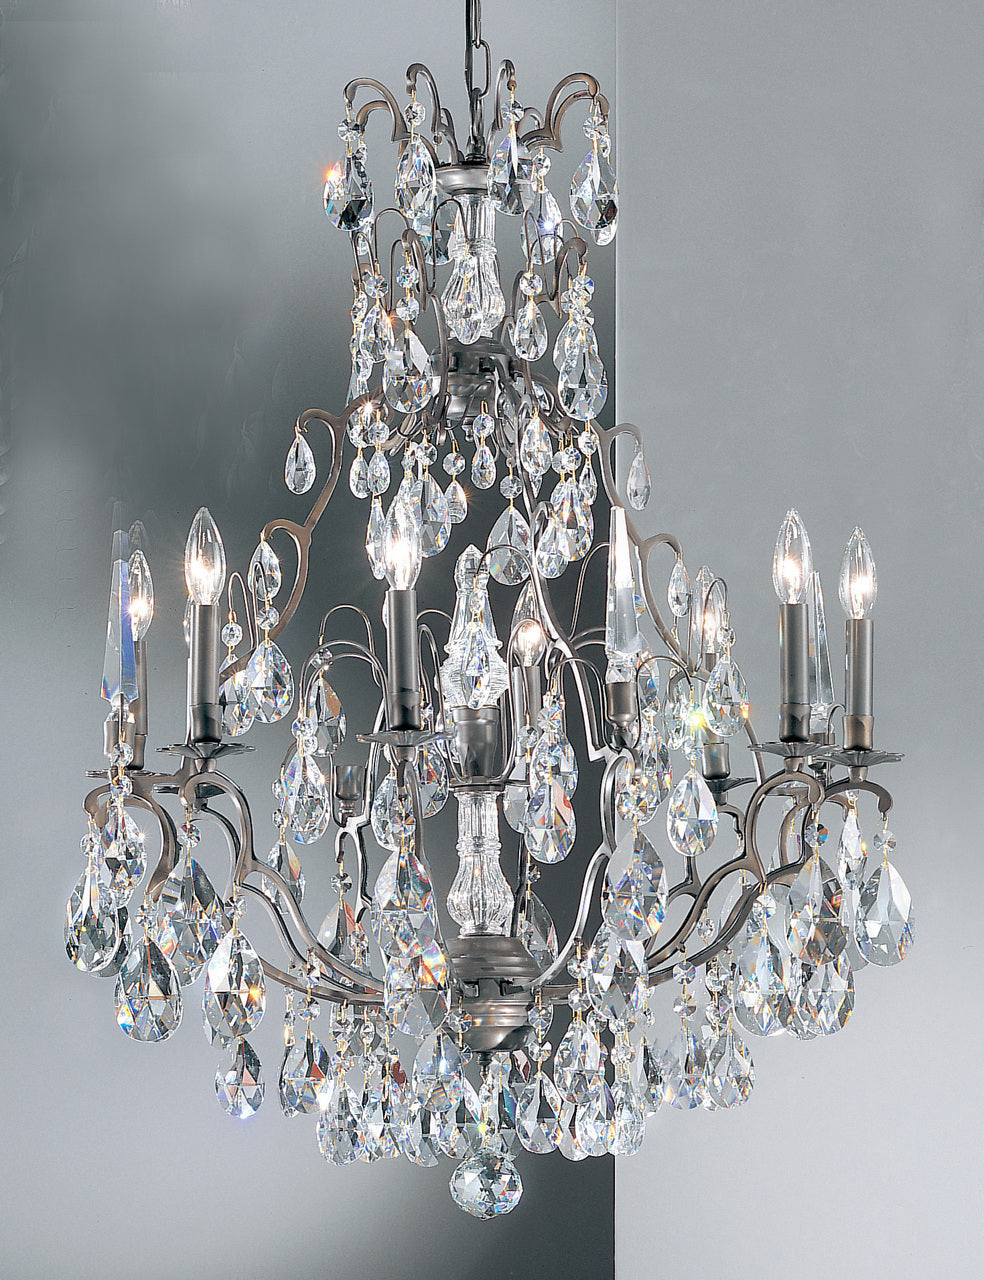 Classic Lighting 9009 AB SC Versailles Crystal Chandelier in Antique Bronze